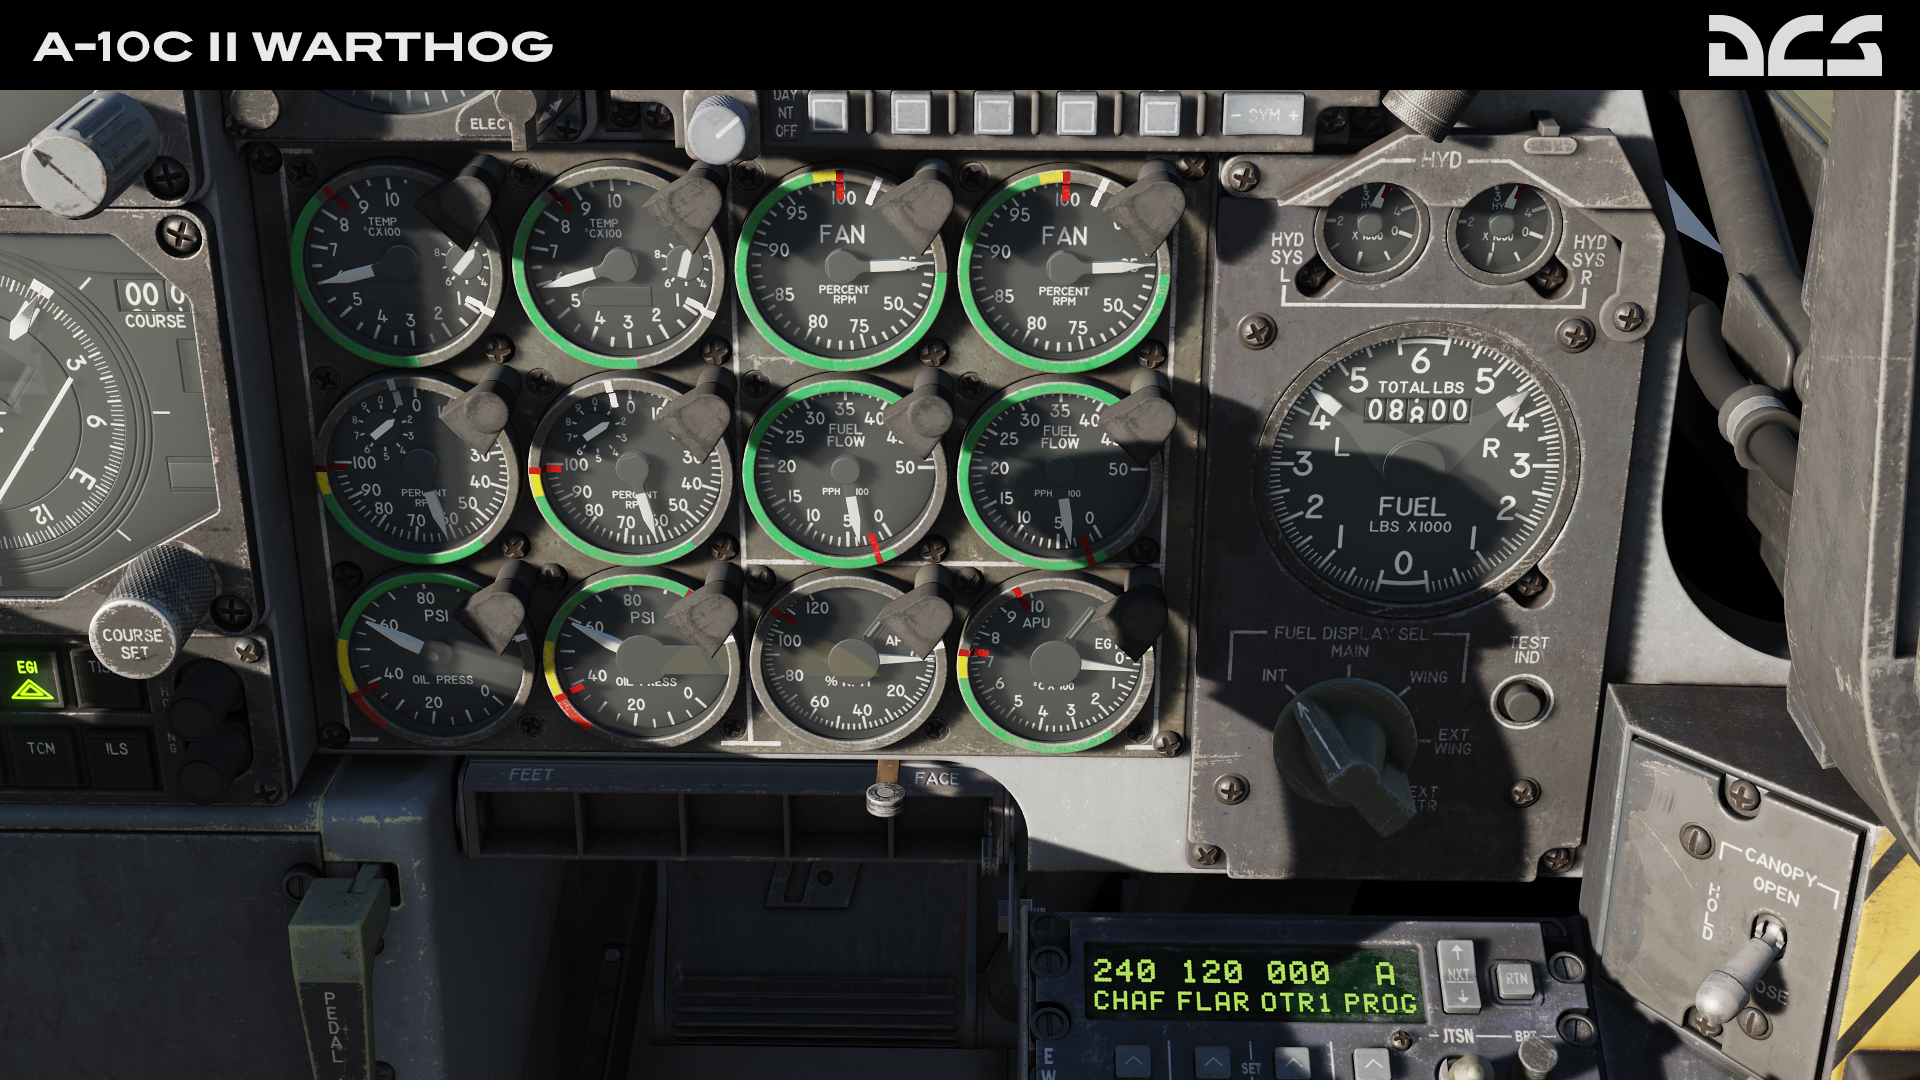 www.digitalcombatsimulator.com/upload/iblock/08d/dcs-world-a-10c-ii-03-flight-simulator.jpg